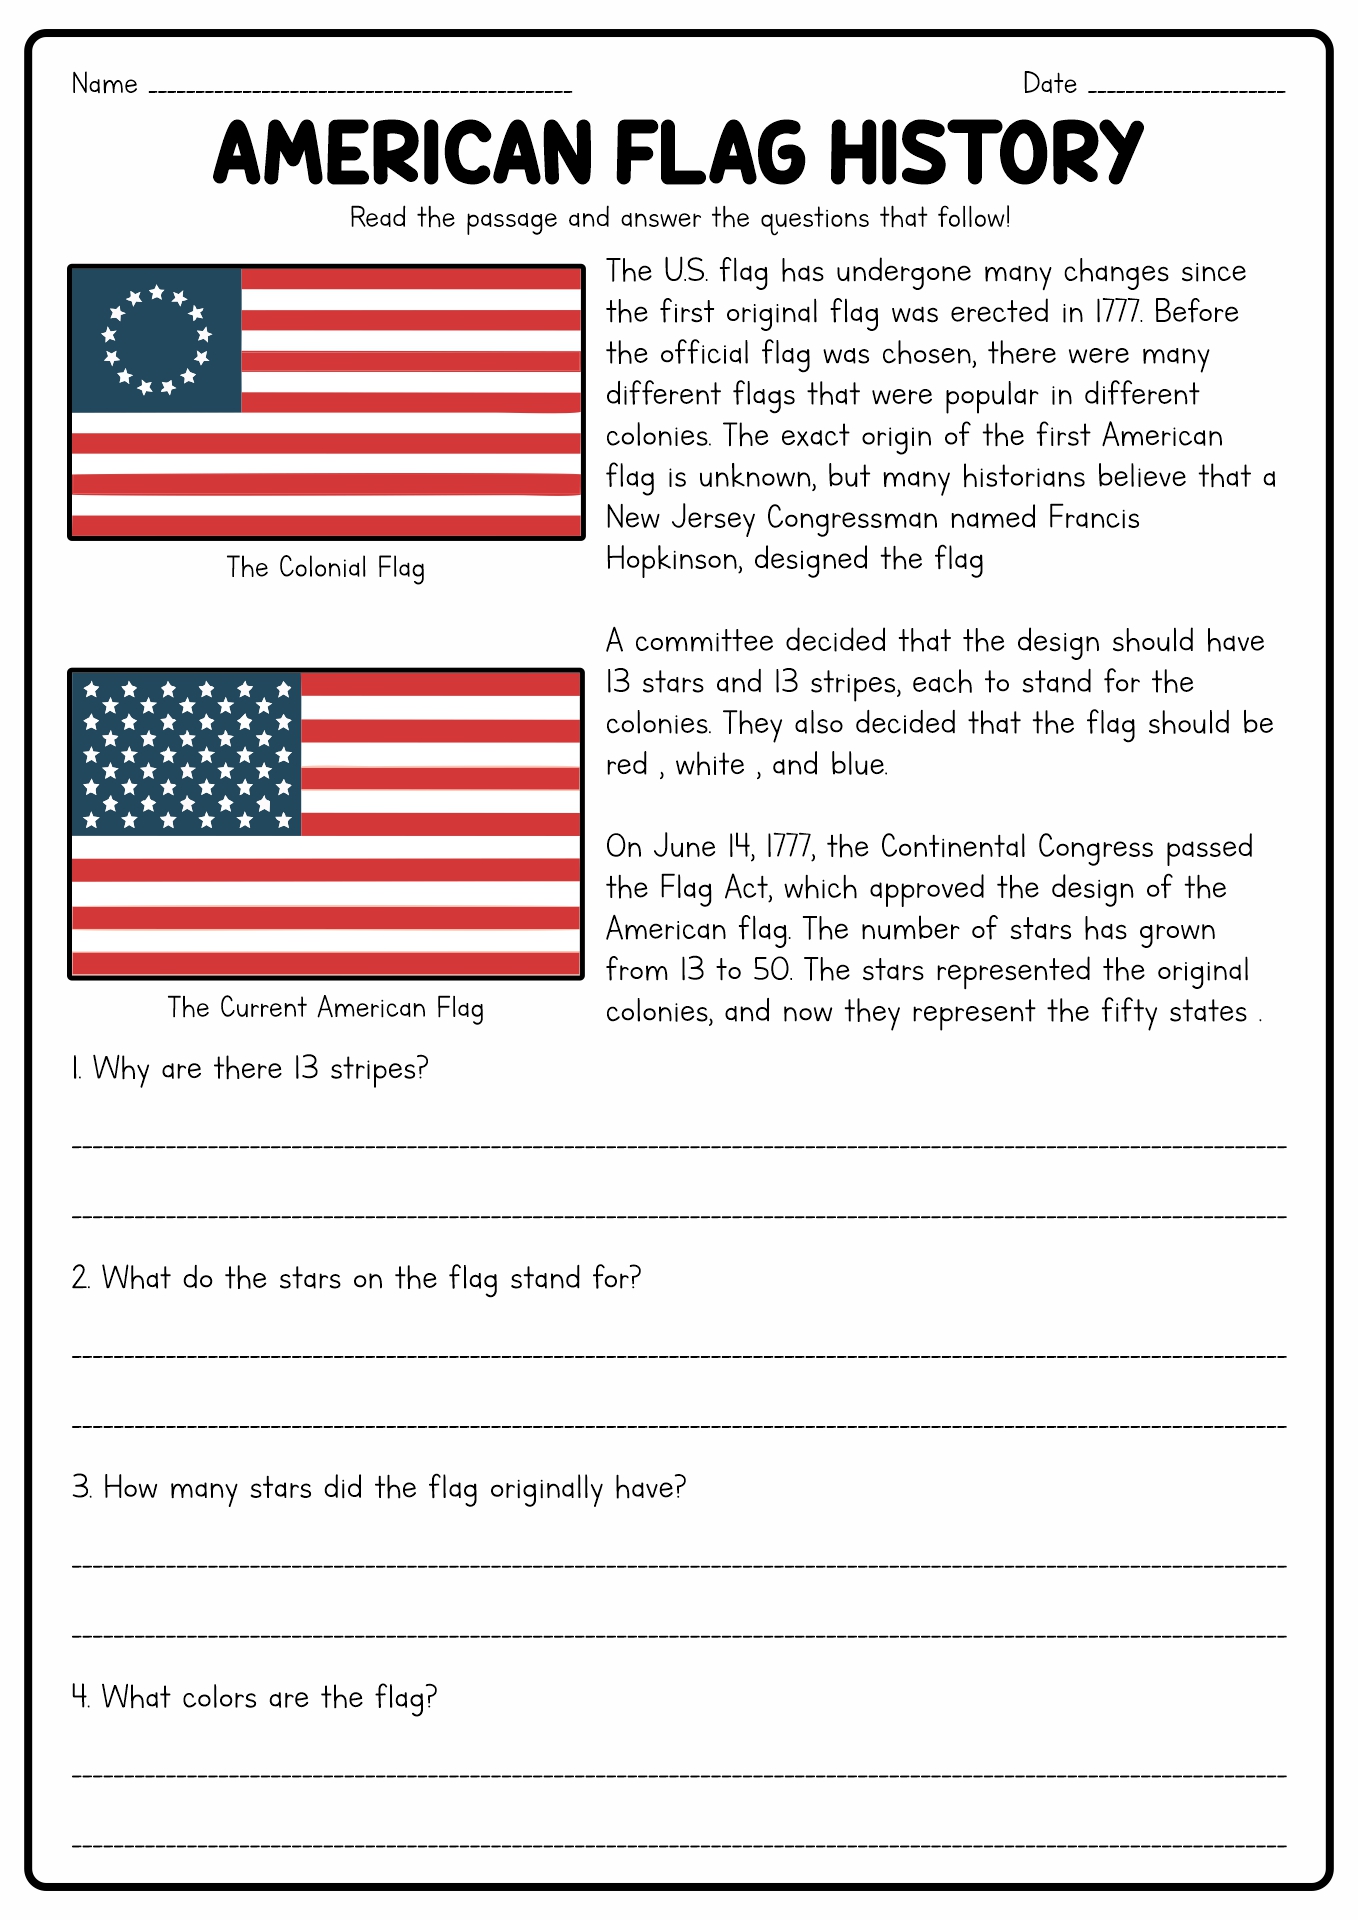 American Flag History Worksheet Image